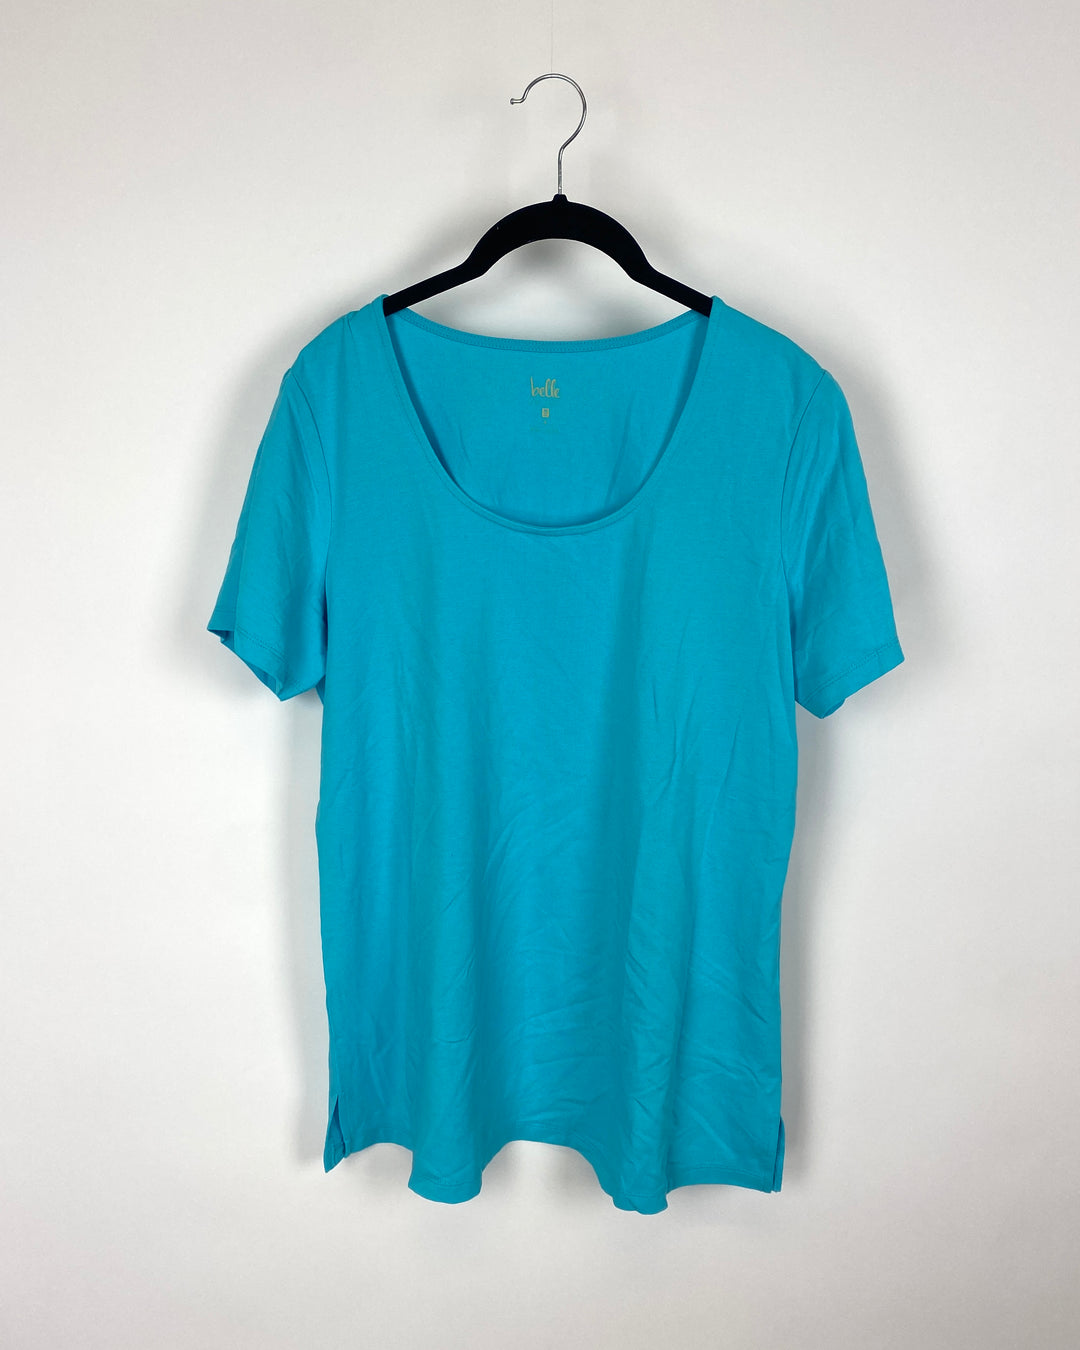 Turquoise Short Sleeve Top - Small/Medium